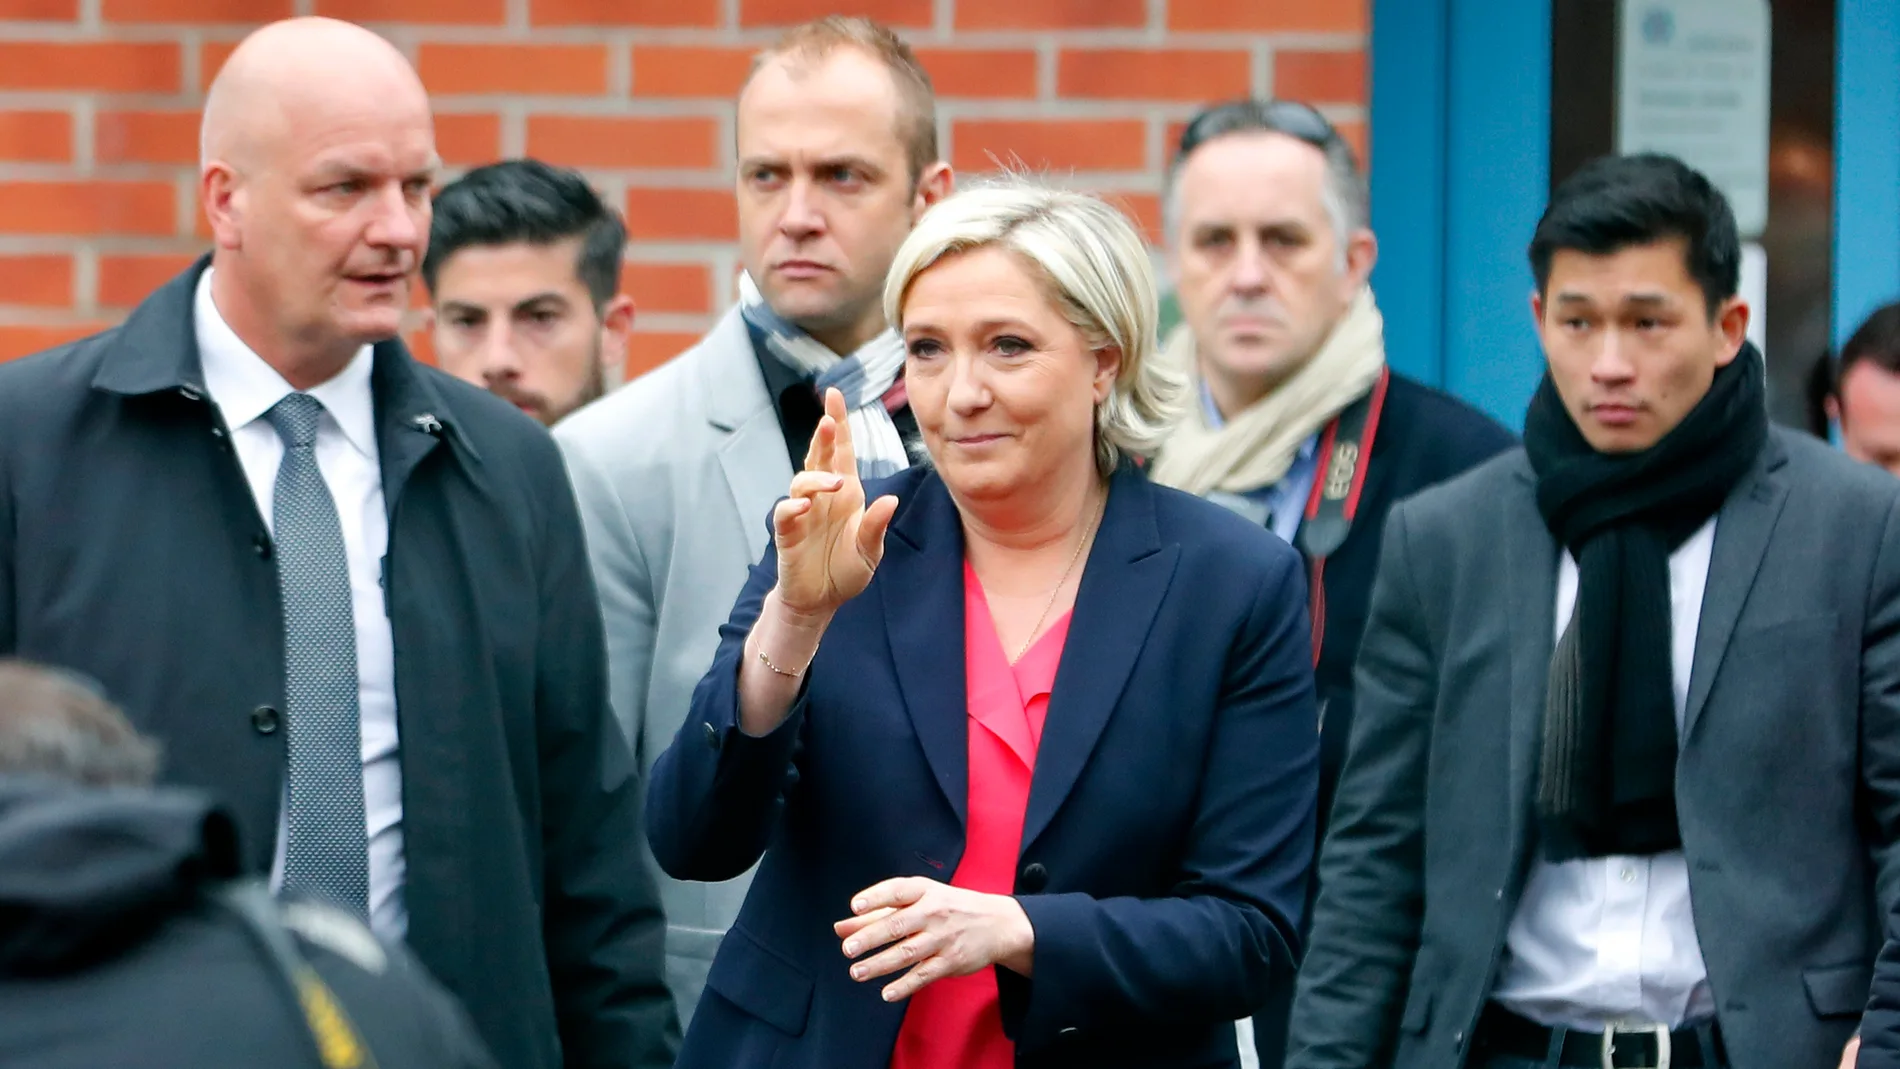 La candidata ultraderechista Marine Le Pen